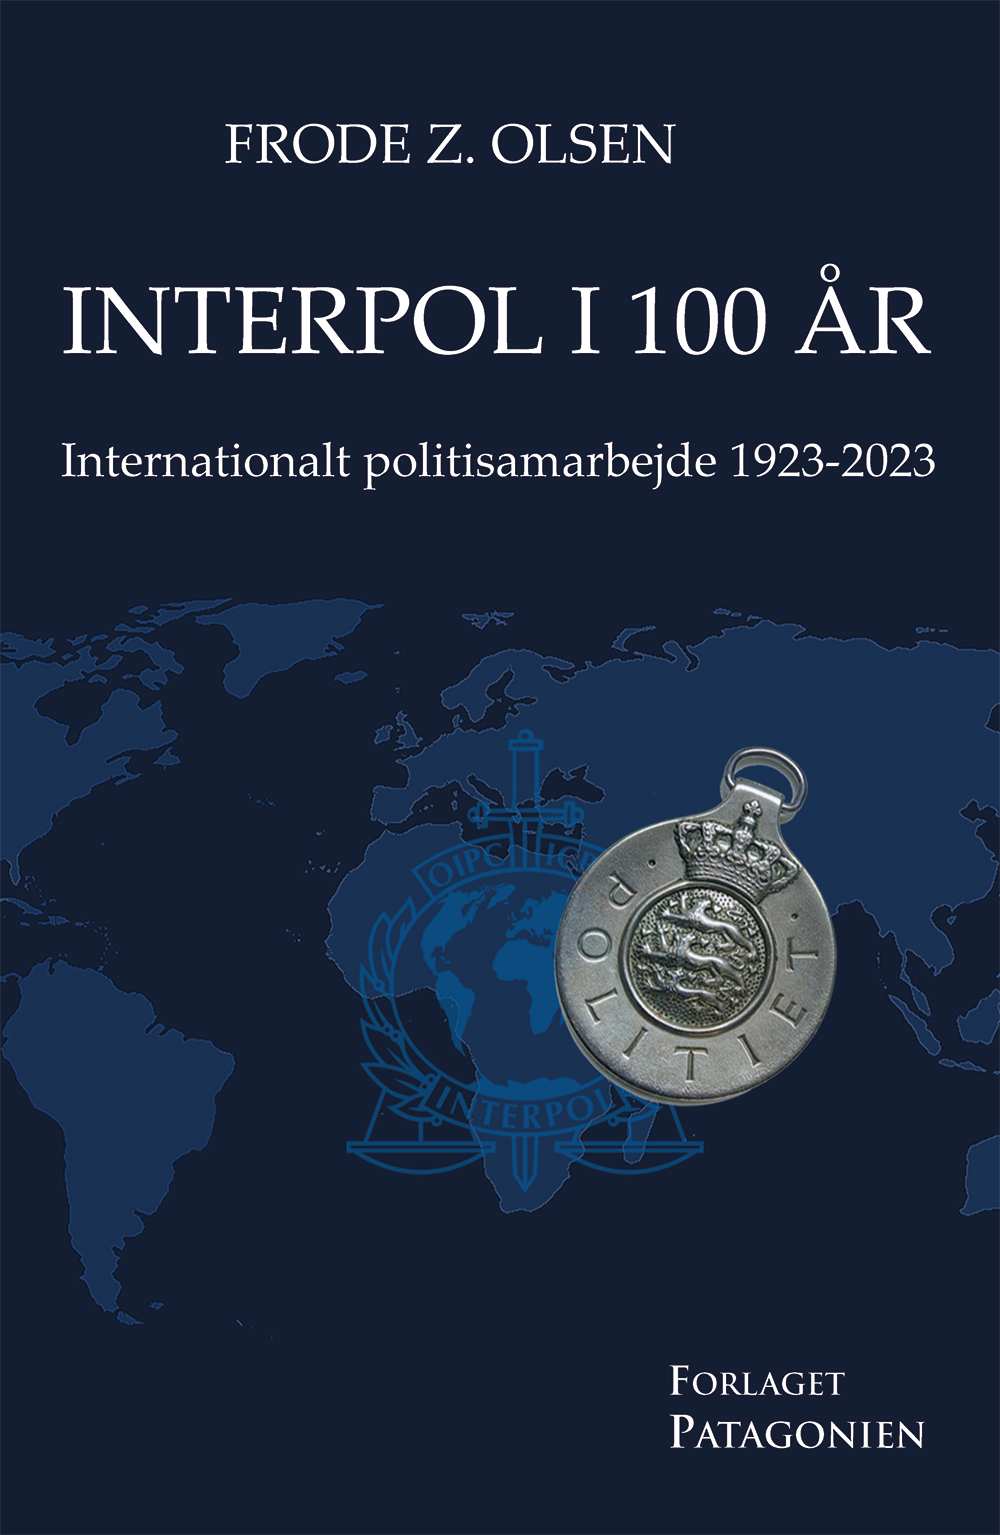 Interpol 100 år, Internationalt politisamarbejde 1923-2023